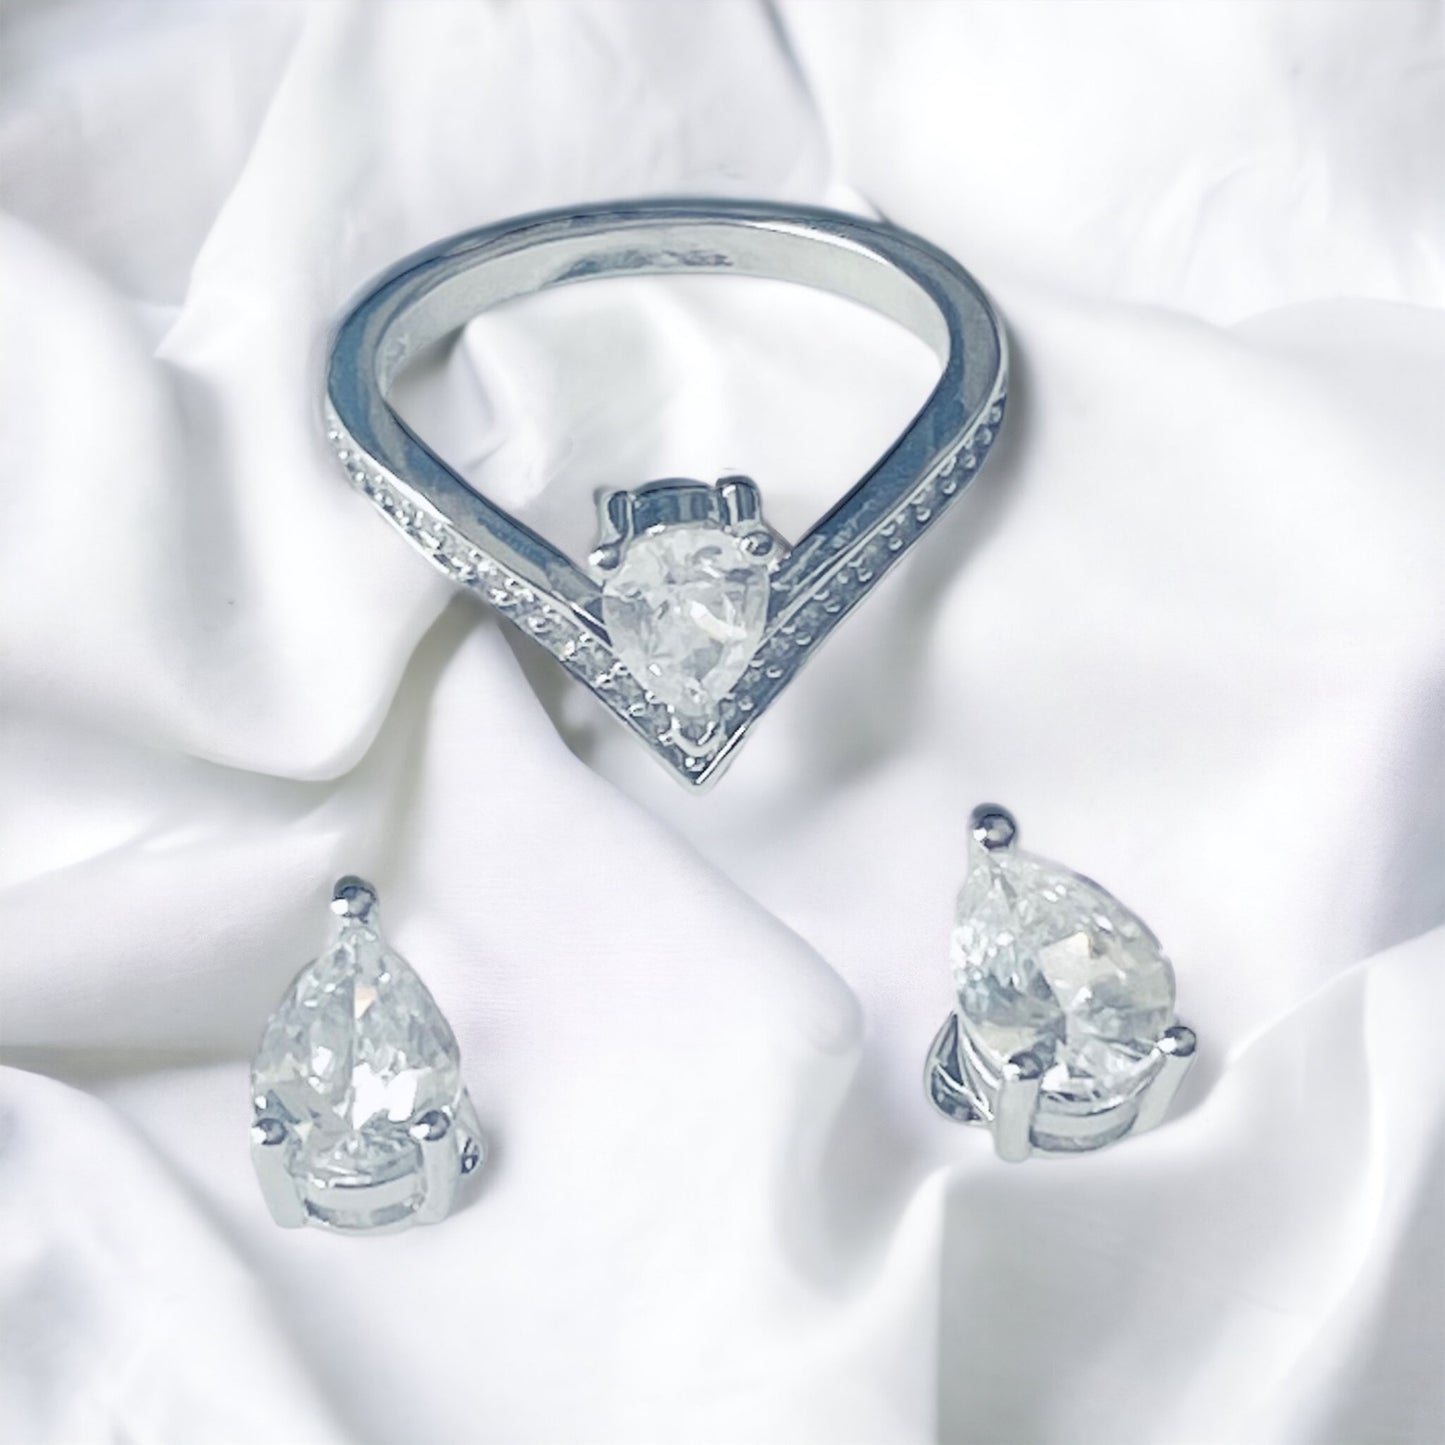 Elegant Earring and Ring Classy Set